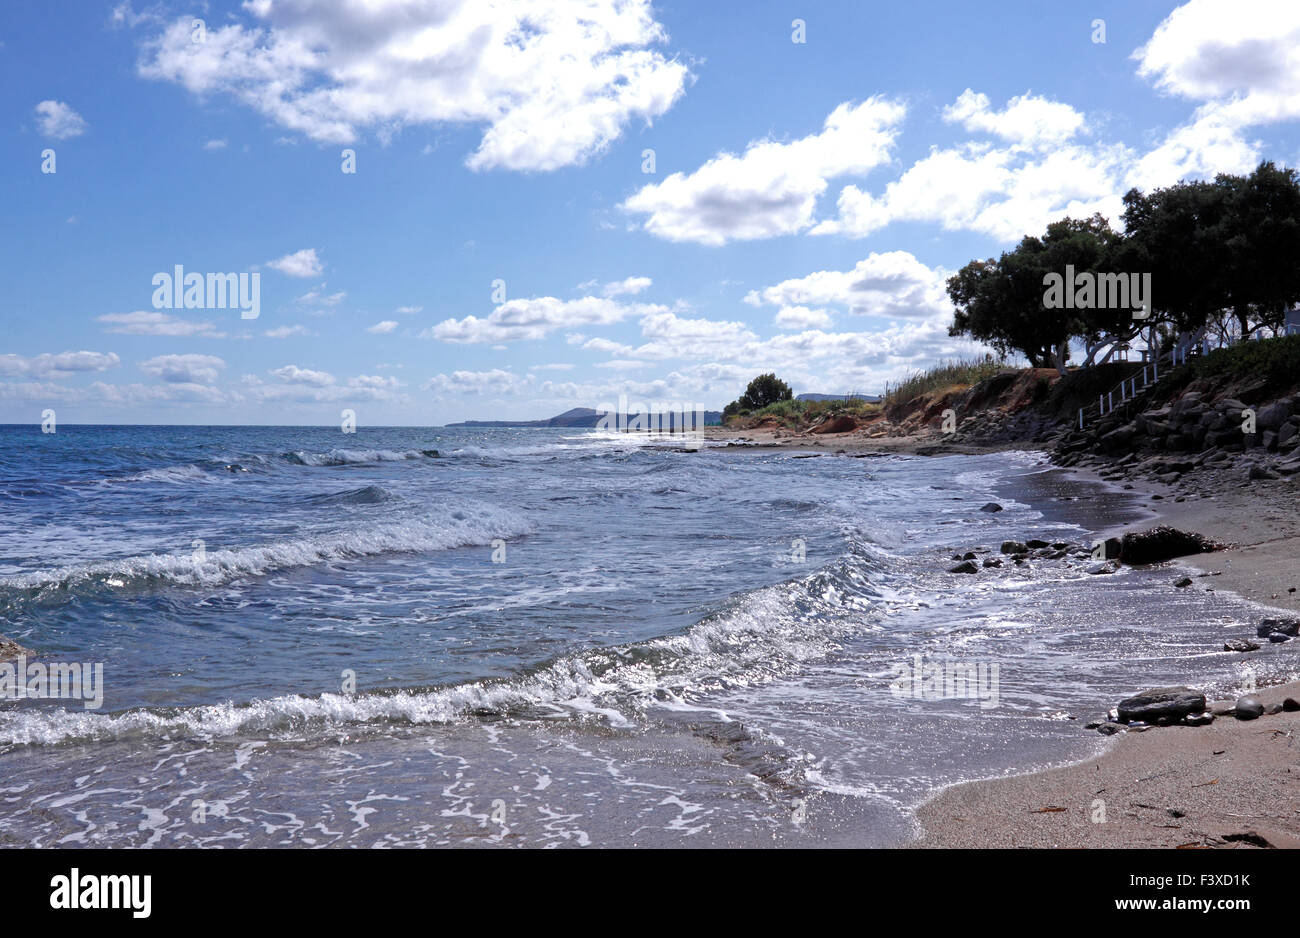 THE WILD NATURAL BEACH AT PIGIANOS KAMPOS NEAR RETHYMNON ON THE GREEK ISLAND OF CRETE. Stock Photo